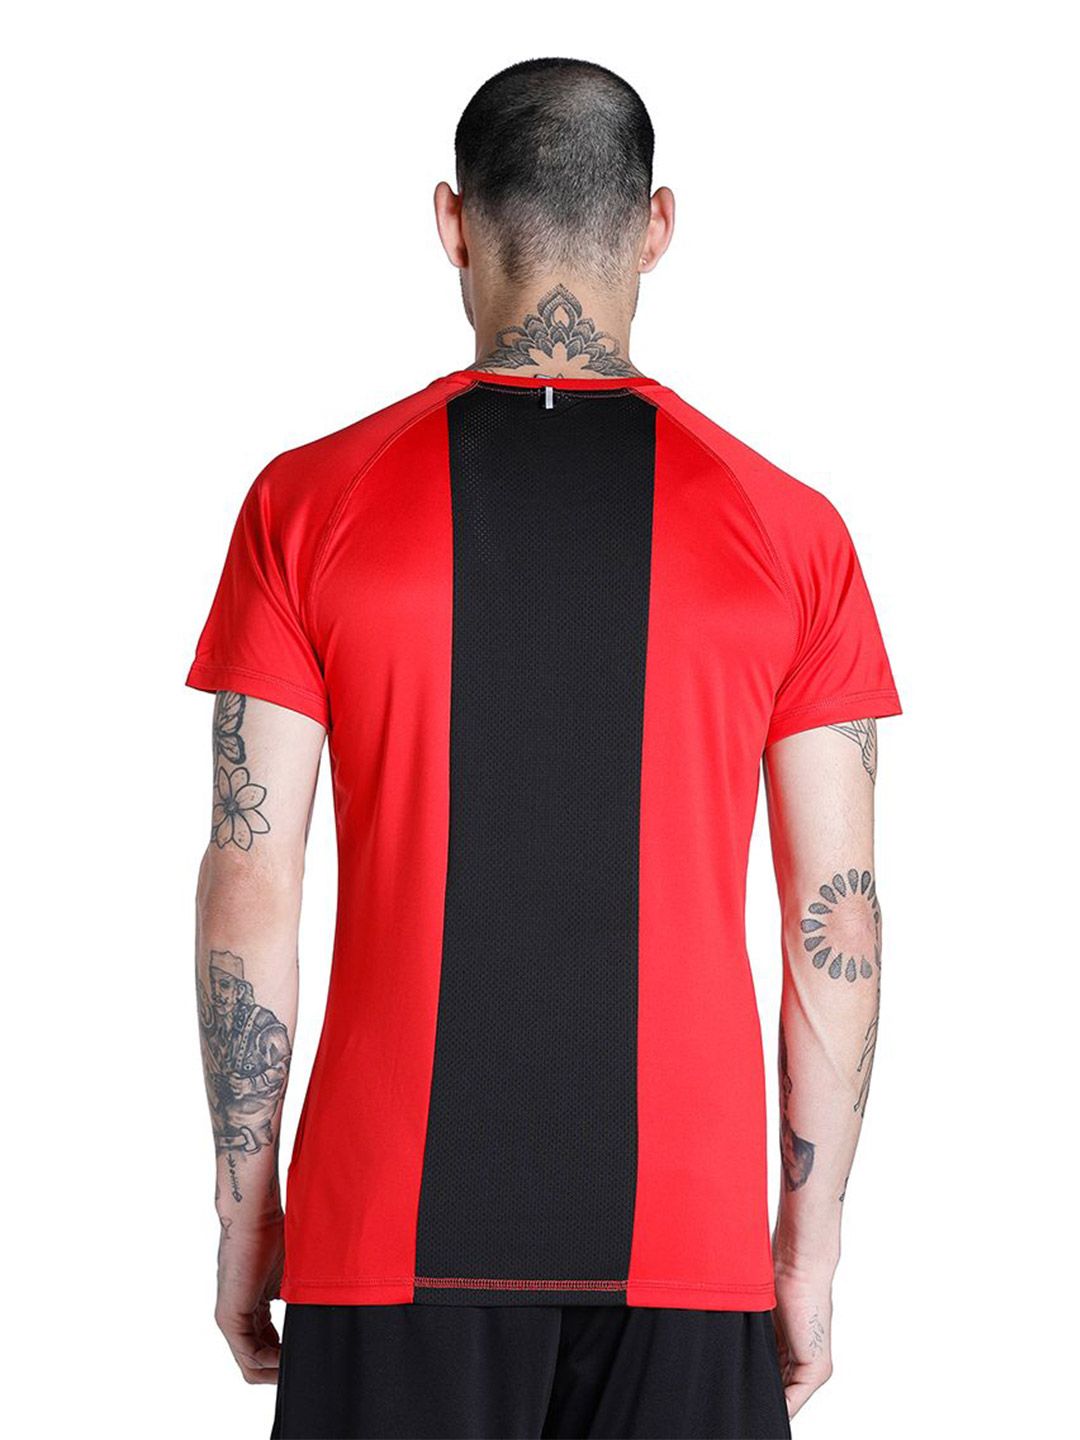 Buy Men High Risk Red Printed RTG T-Shirt From Fancode